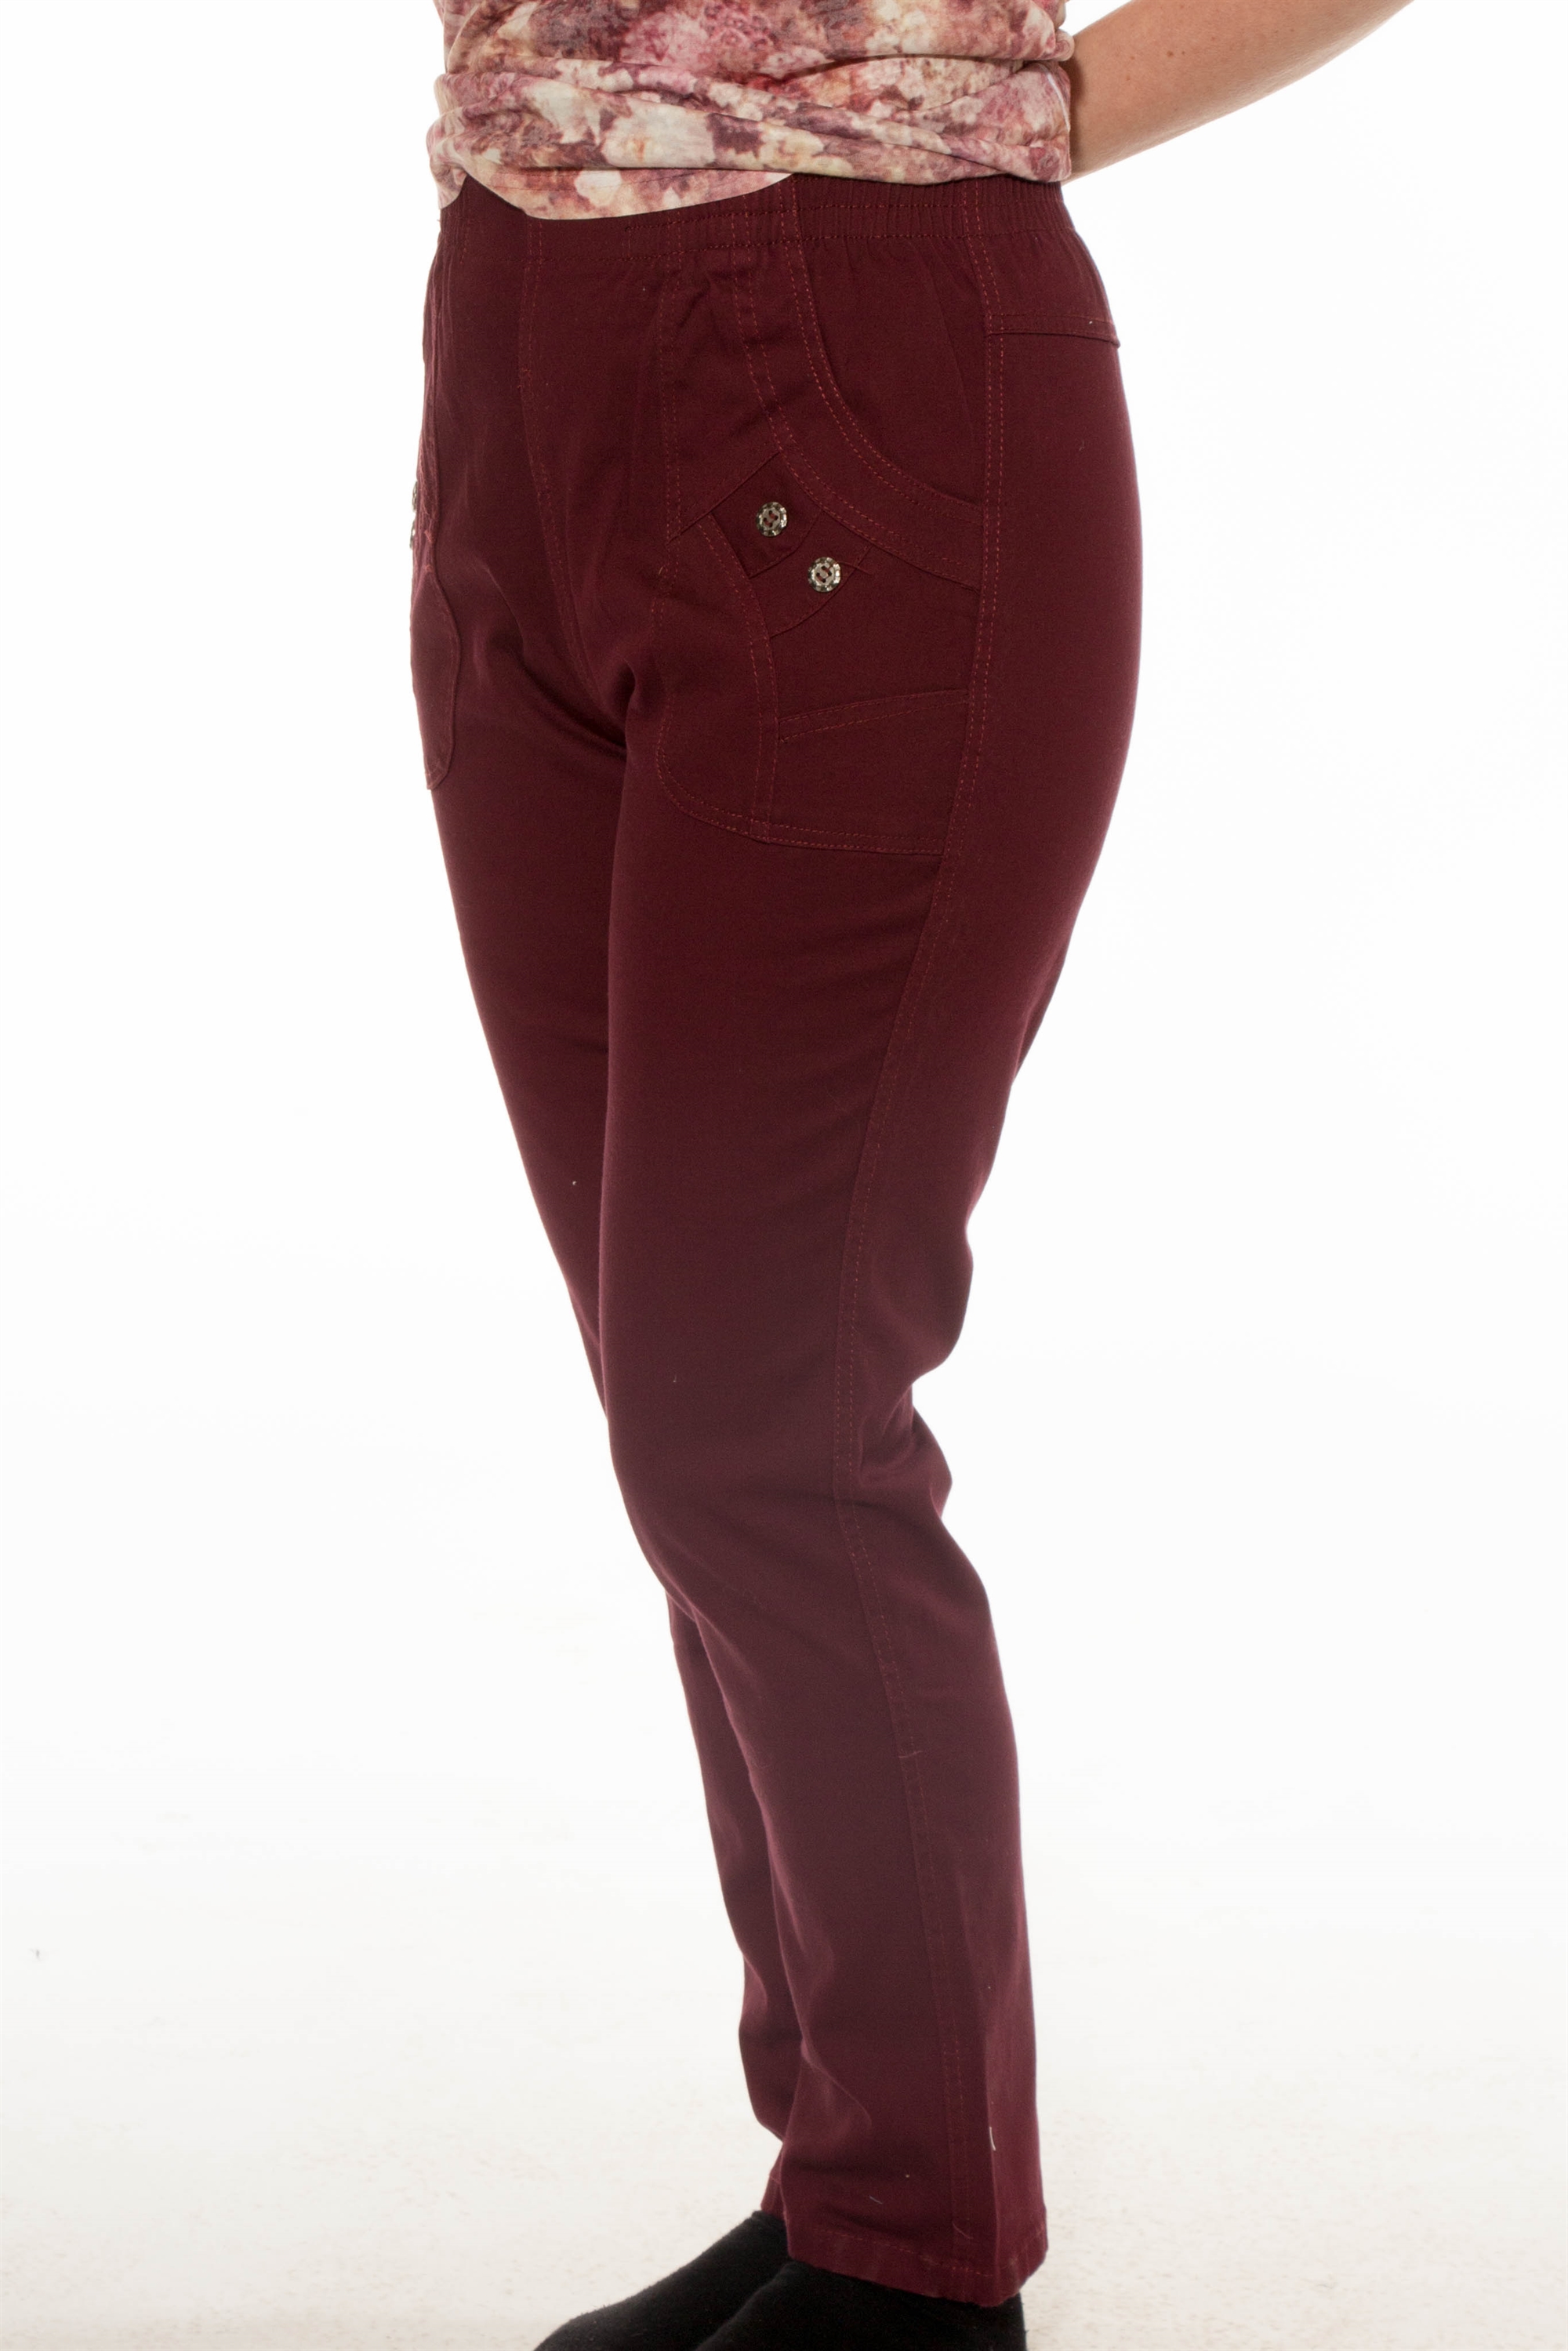 loft nevø Optimistisk Pasfom Pia - Bordeaux bukser i vinterbomuld med elastik i livet